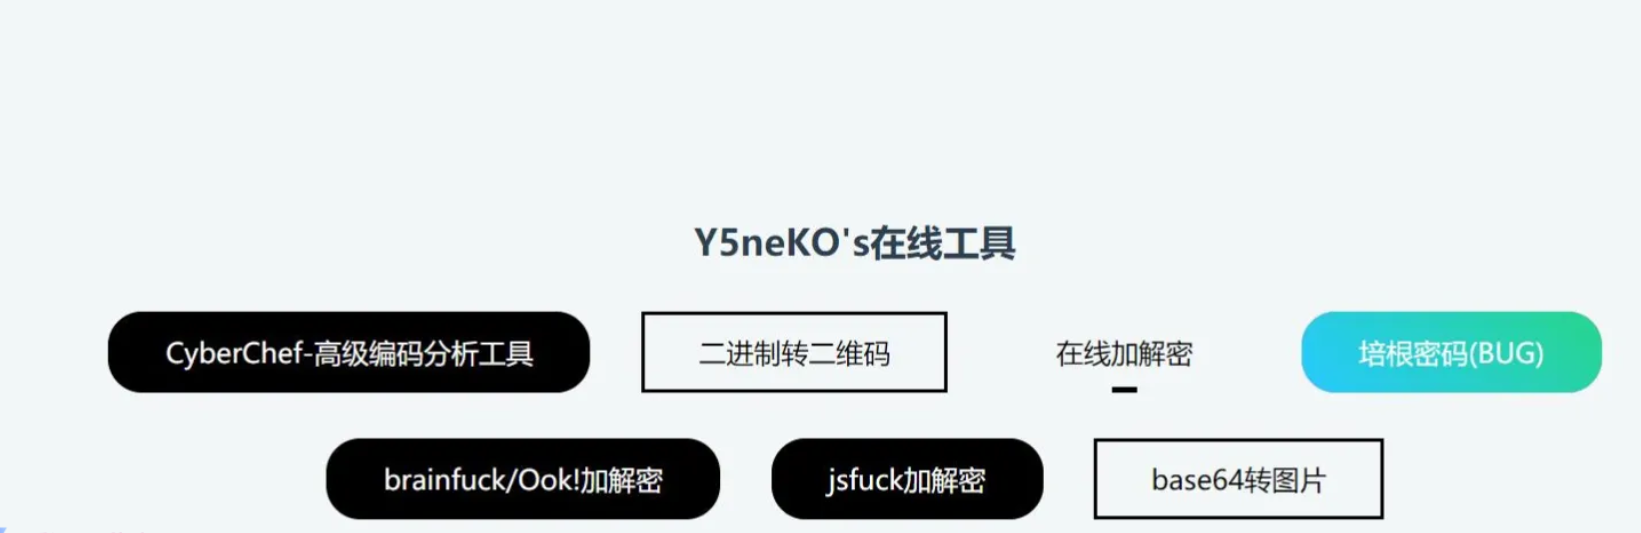 Y5neKOWeb在线工具源码